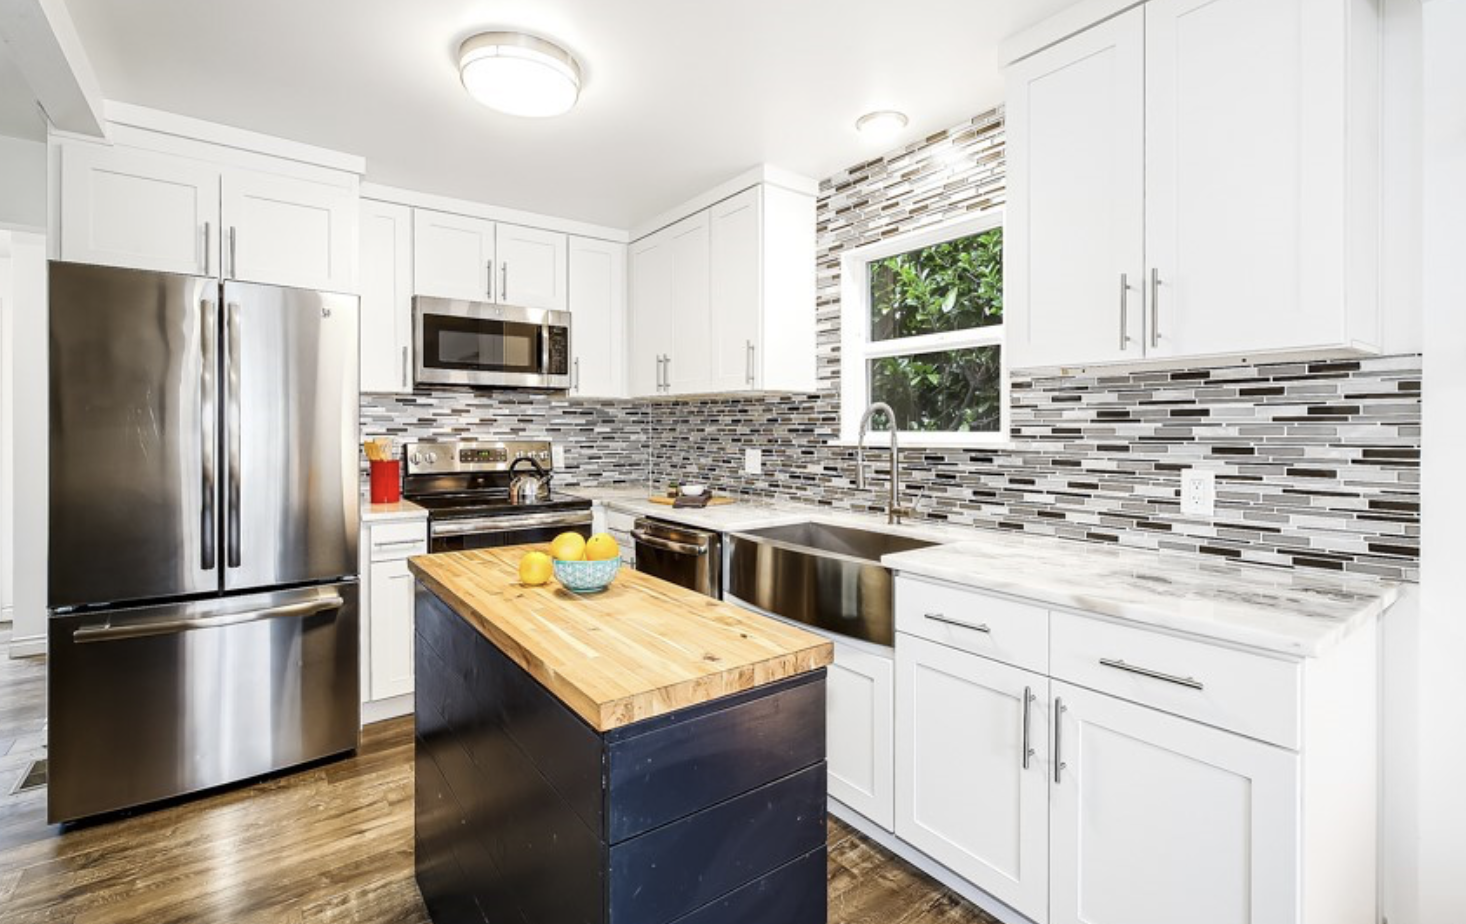 Bright updated farmhouse kitchen with modern tile backsplash and butcher block island